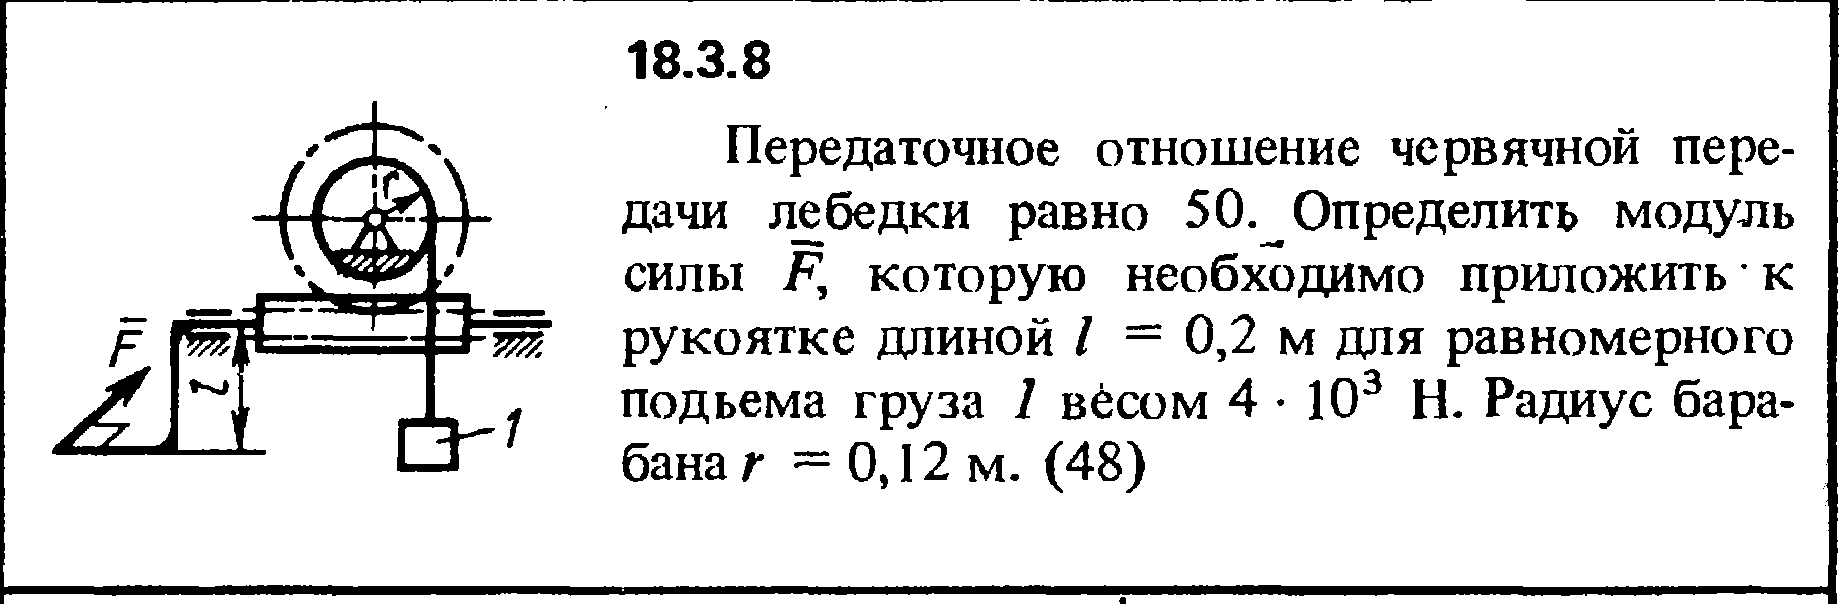 Решение 18.3.8 из сборника (решебника) Кепе О.Е. 1989